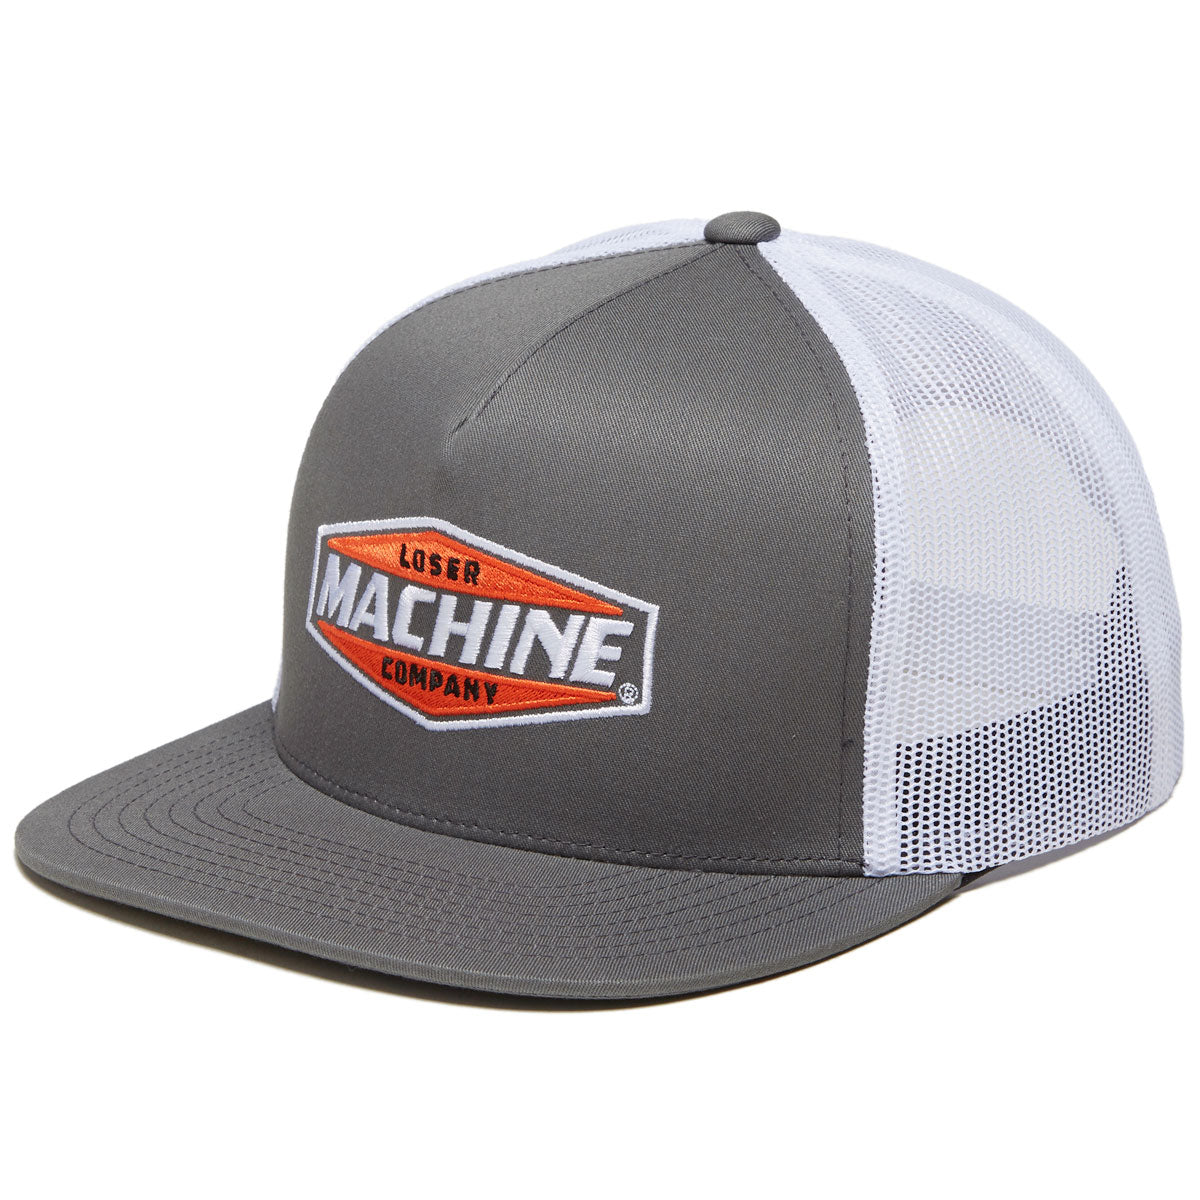 Loser Machine Thomas Hat - Charcoal/White image 1